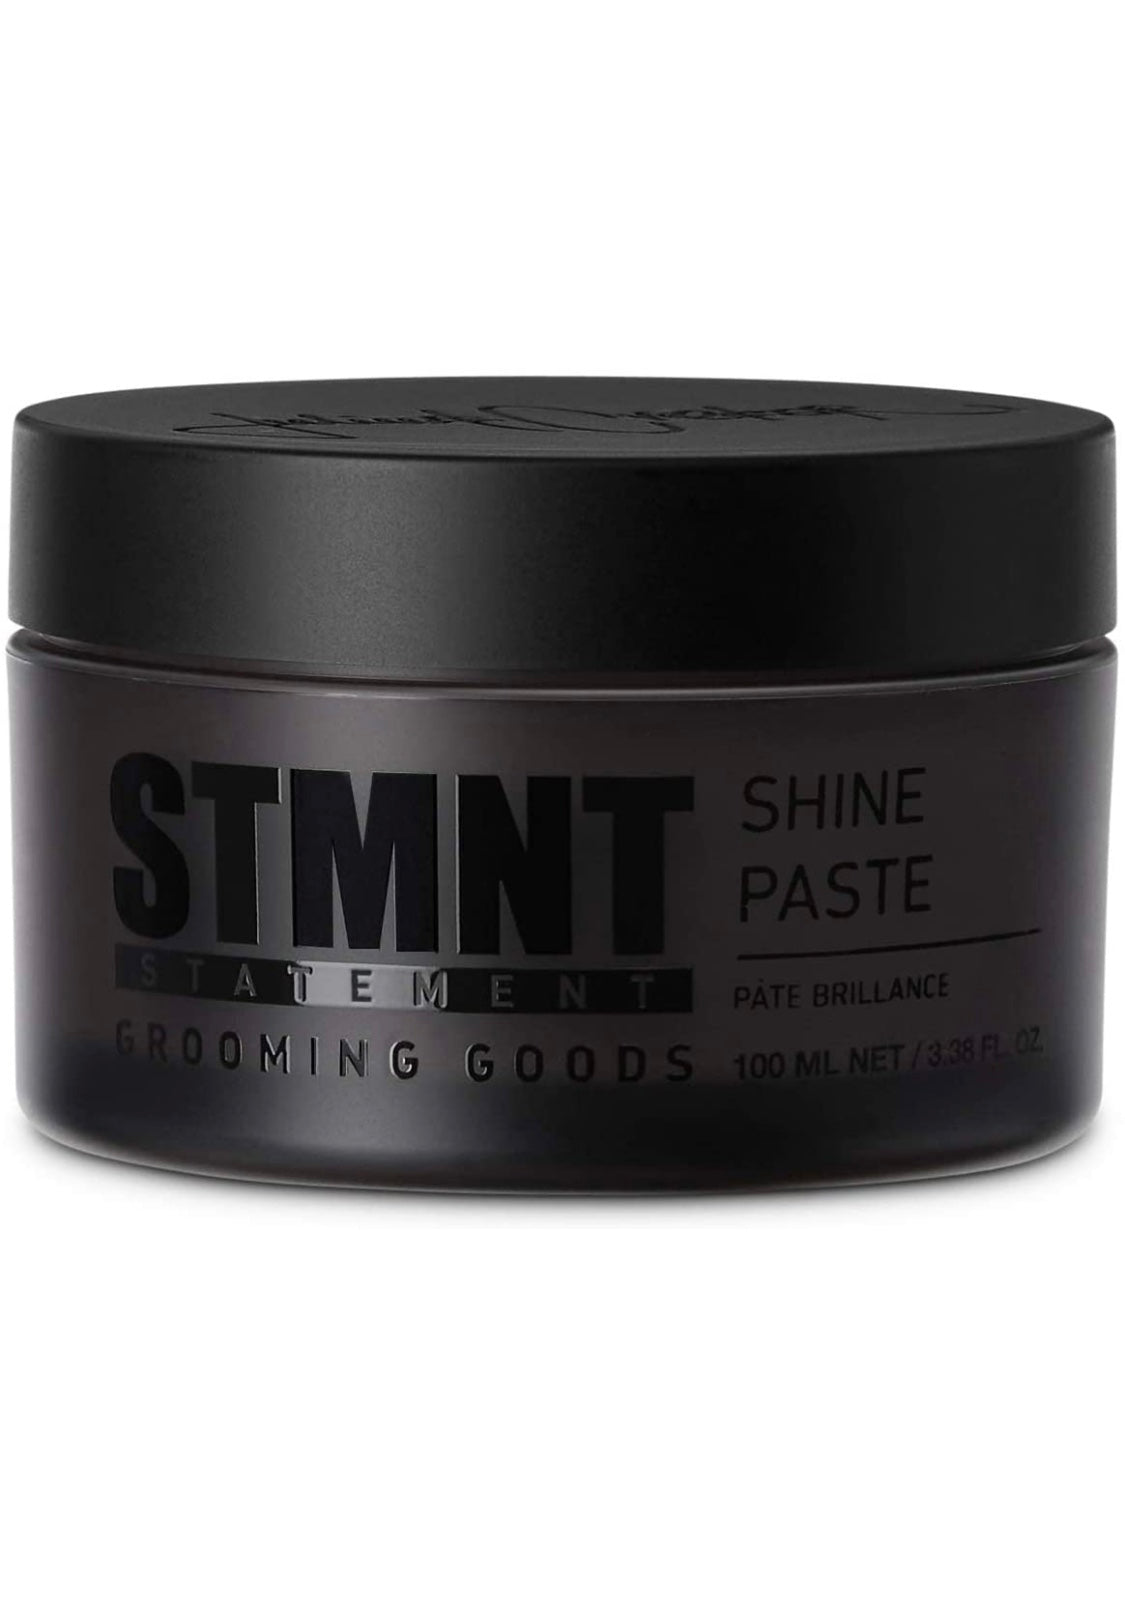 Stmnt  - Shine paste 3.38 fl. oz./ 100 ml